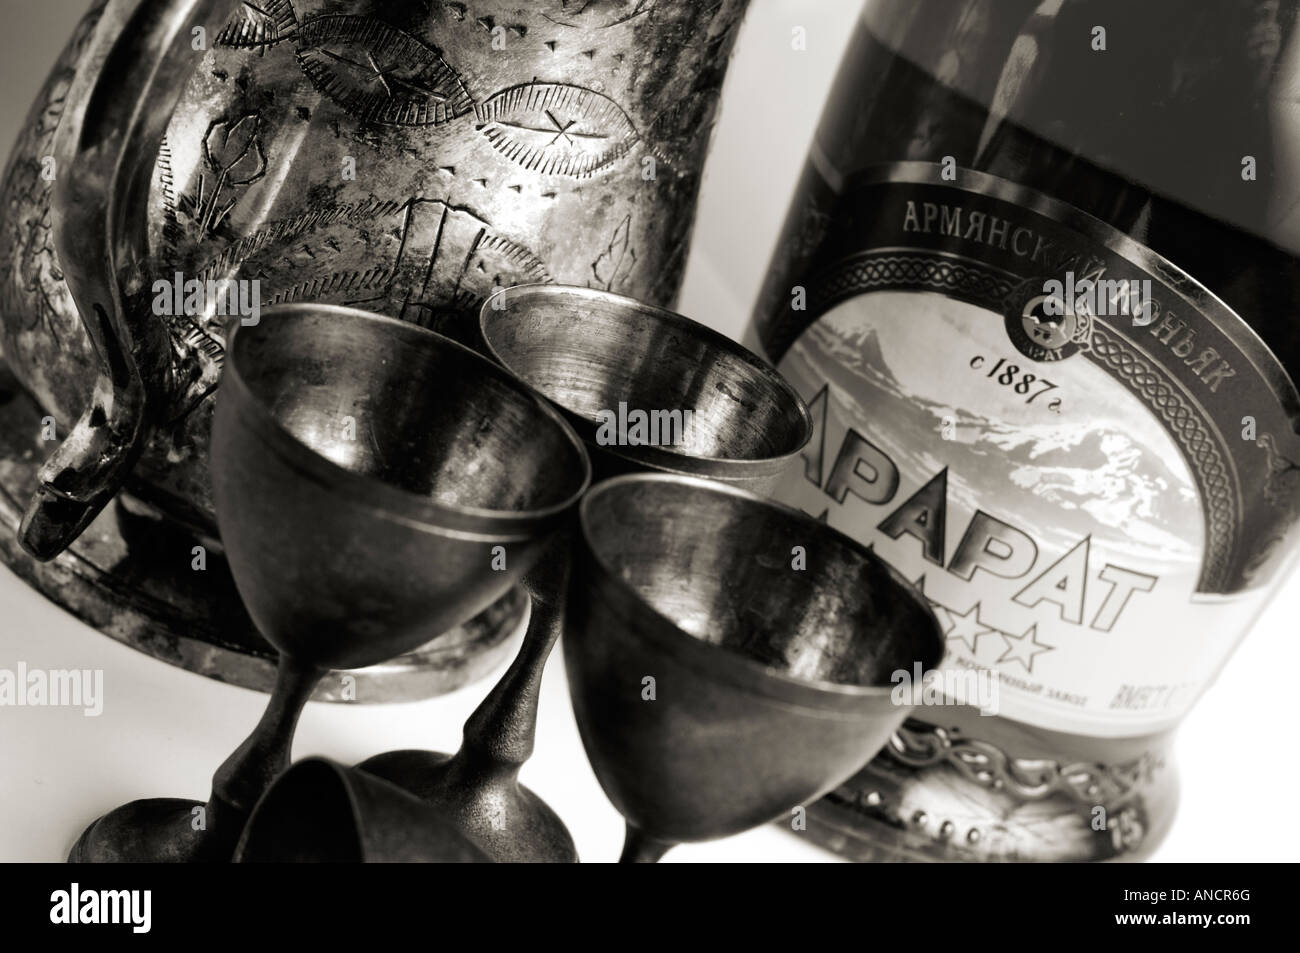 Bottle of famous Armenian cognac ARARAT and vintage silverware close up Stock Photo